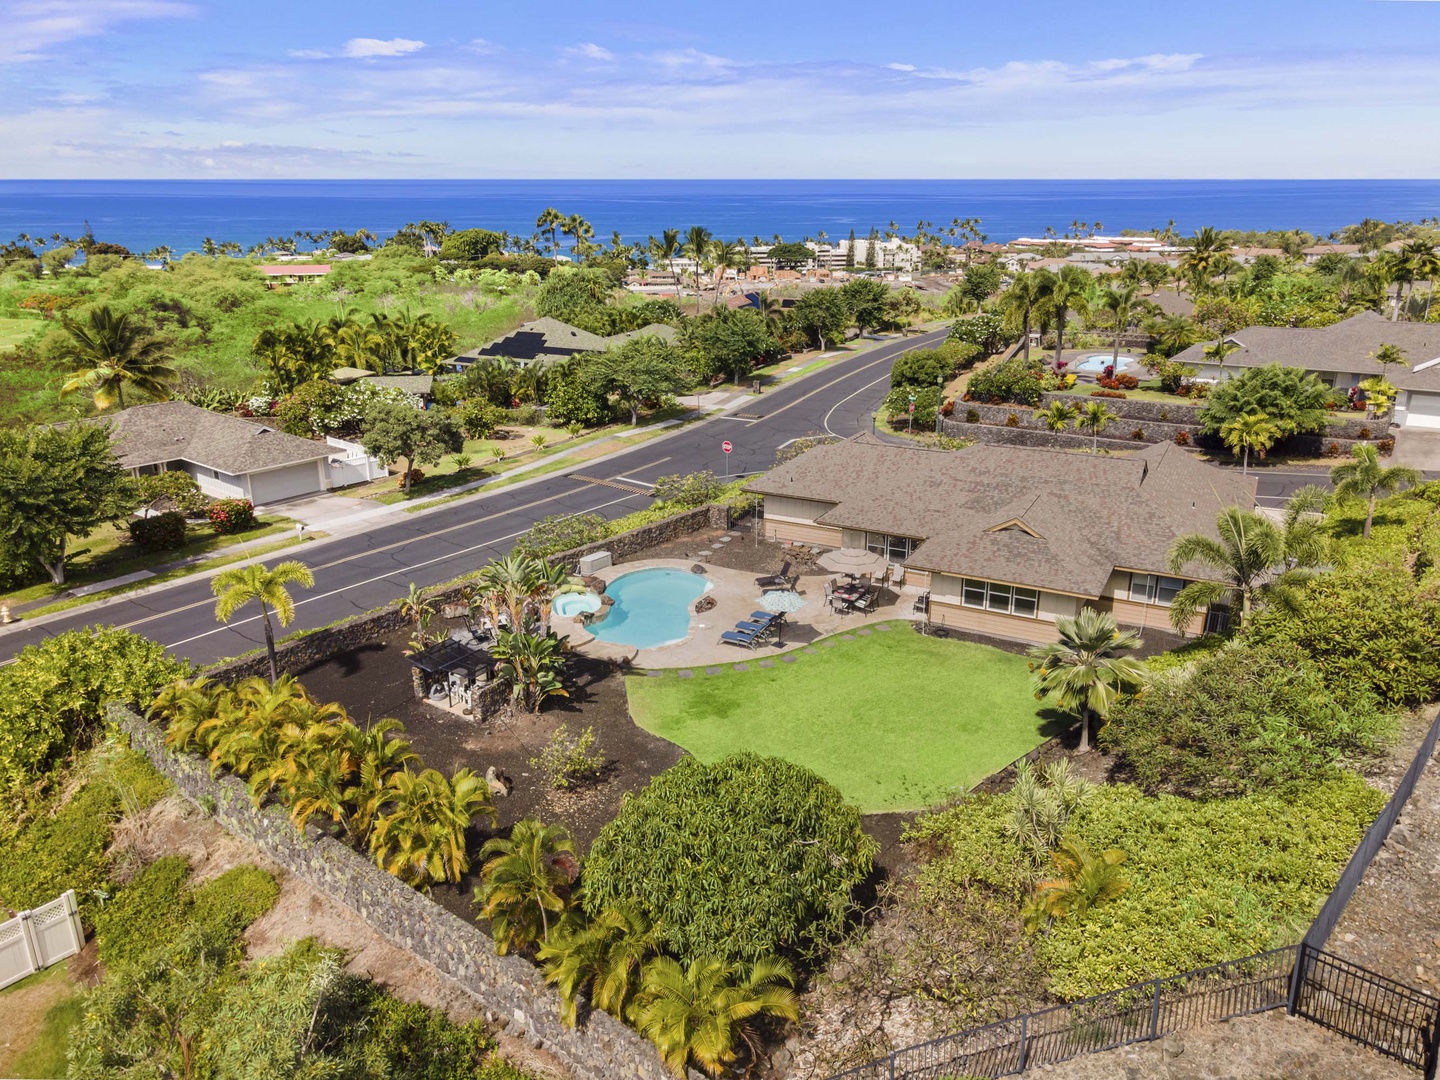 Kailua Kona Vacation Rentals, Kahakai Estates Hale - Nature and sea meld in this stunning aerial view of the neighborhood.